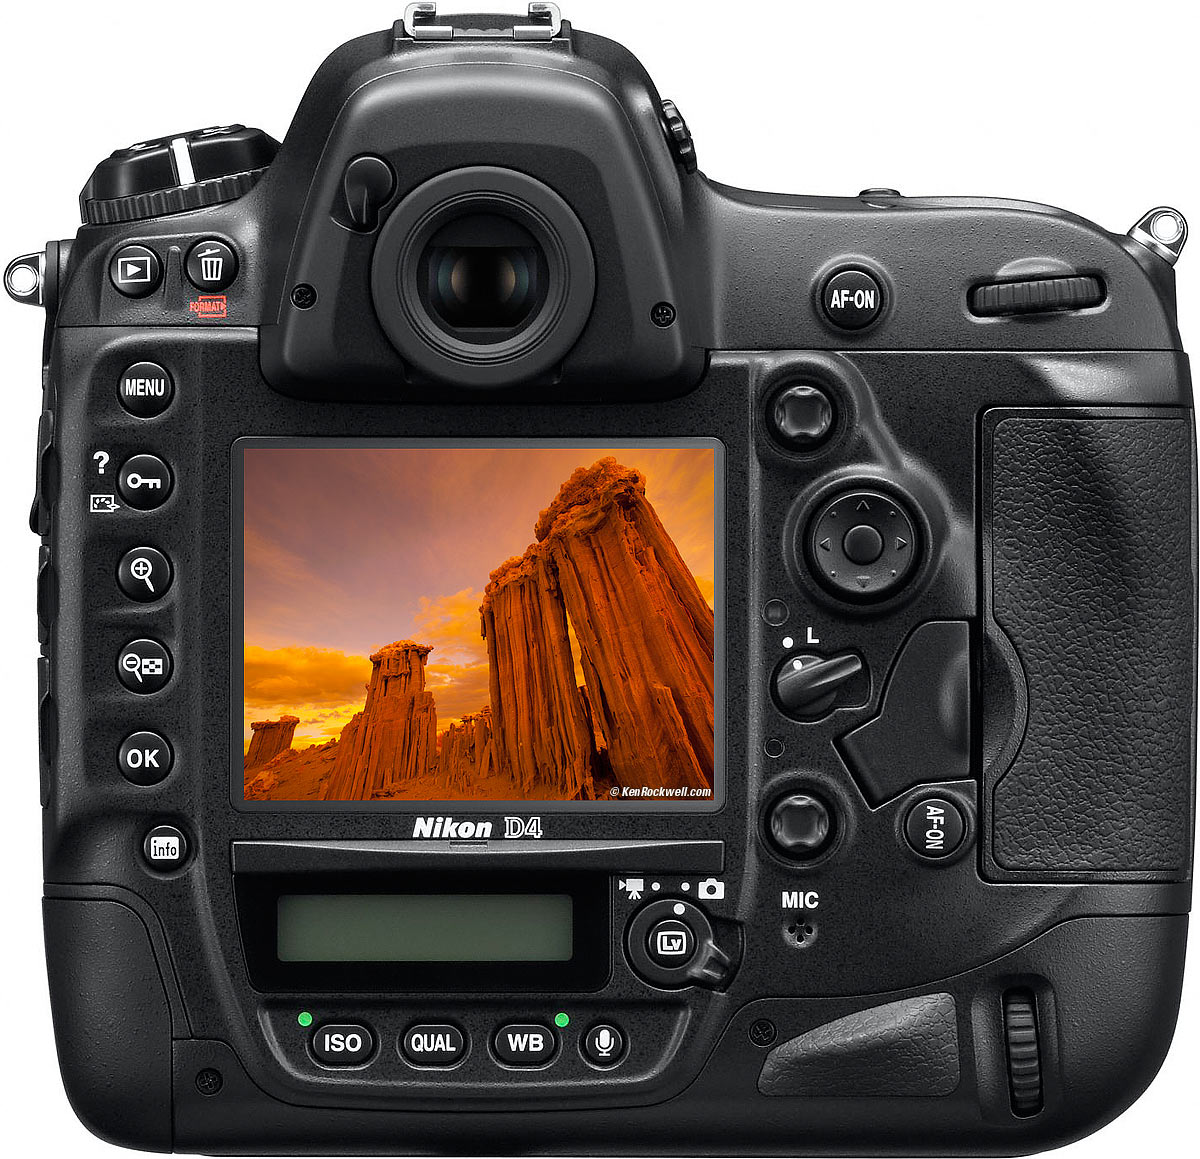 Nikon D4 Digital SLR Camera (Body Only).......1 unit.....$ 500 USD